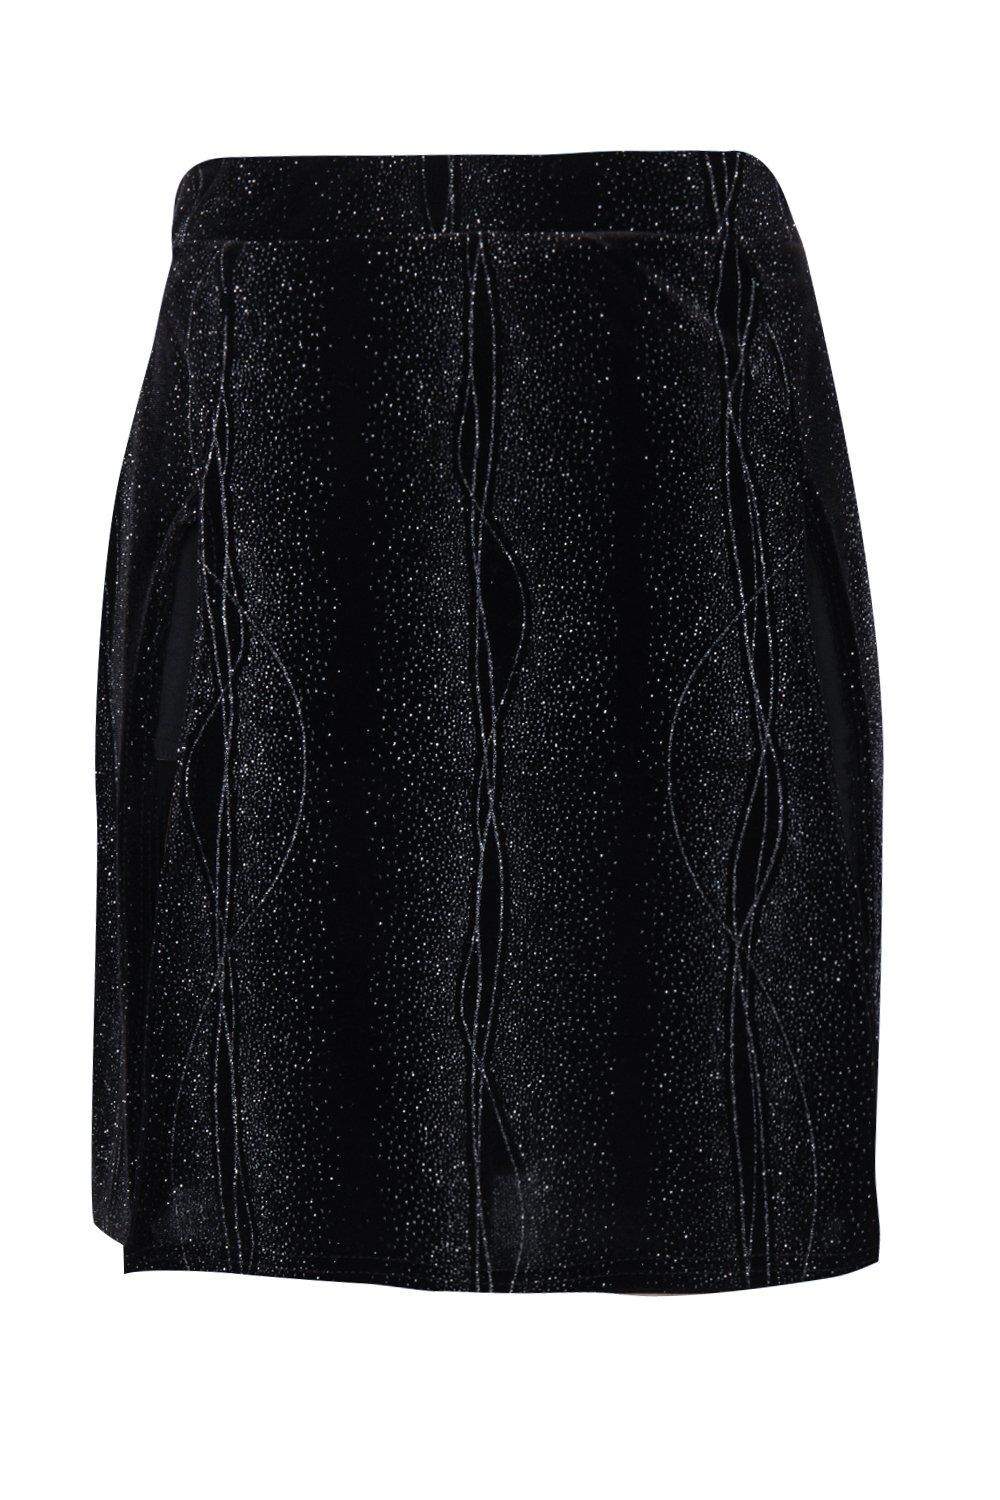 Boohoo Womens Skye Split Sides Mini Skirt | eBay